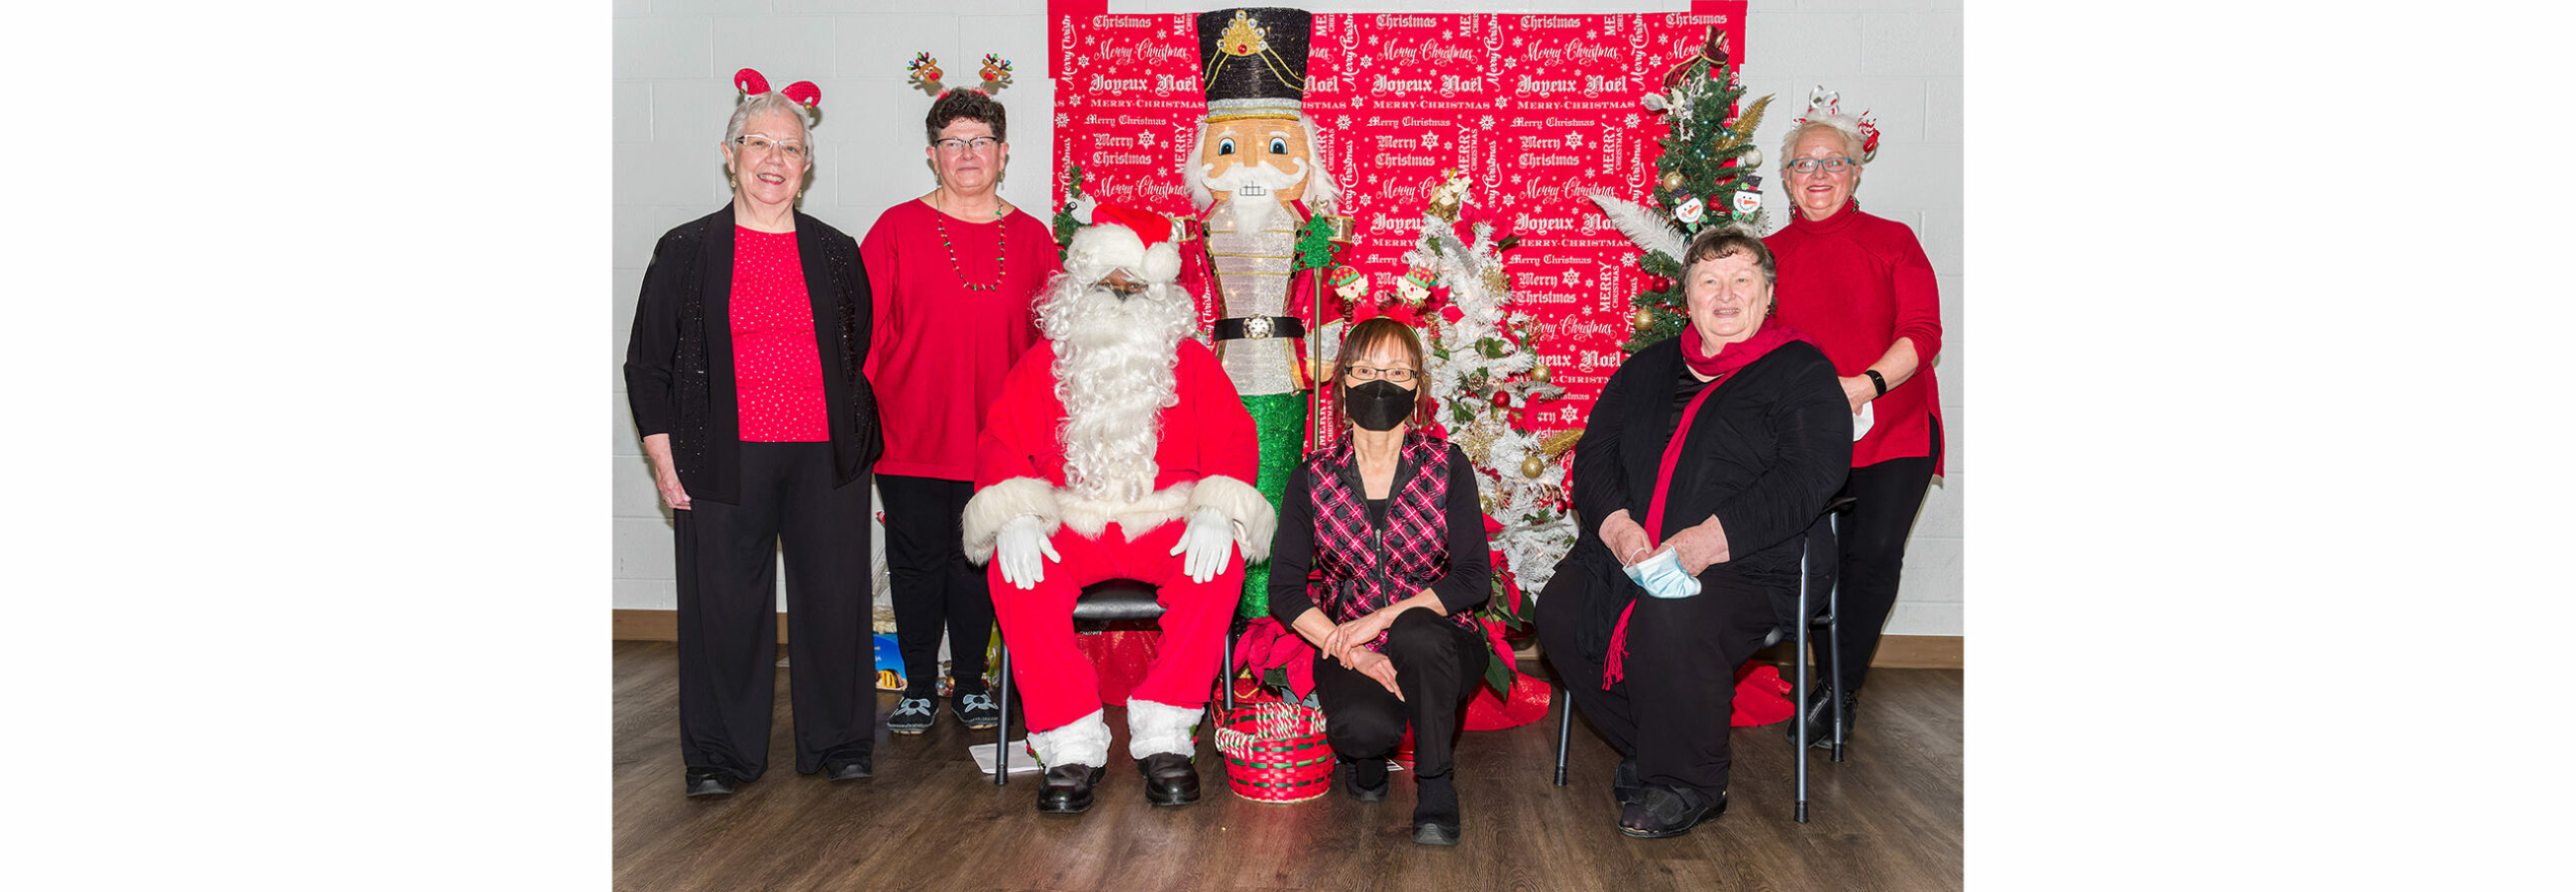 SWESA Singers at Photos with Santa on Dec 16 2021